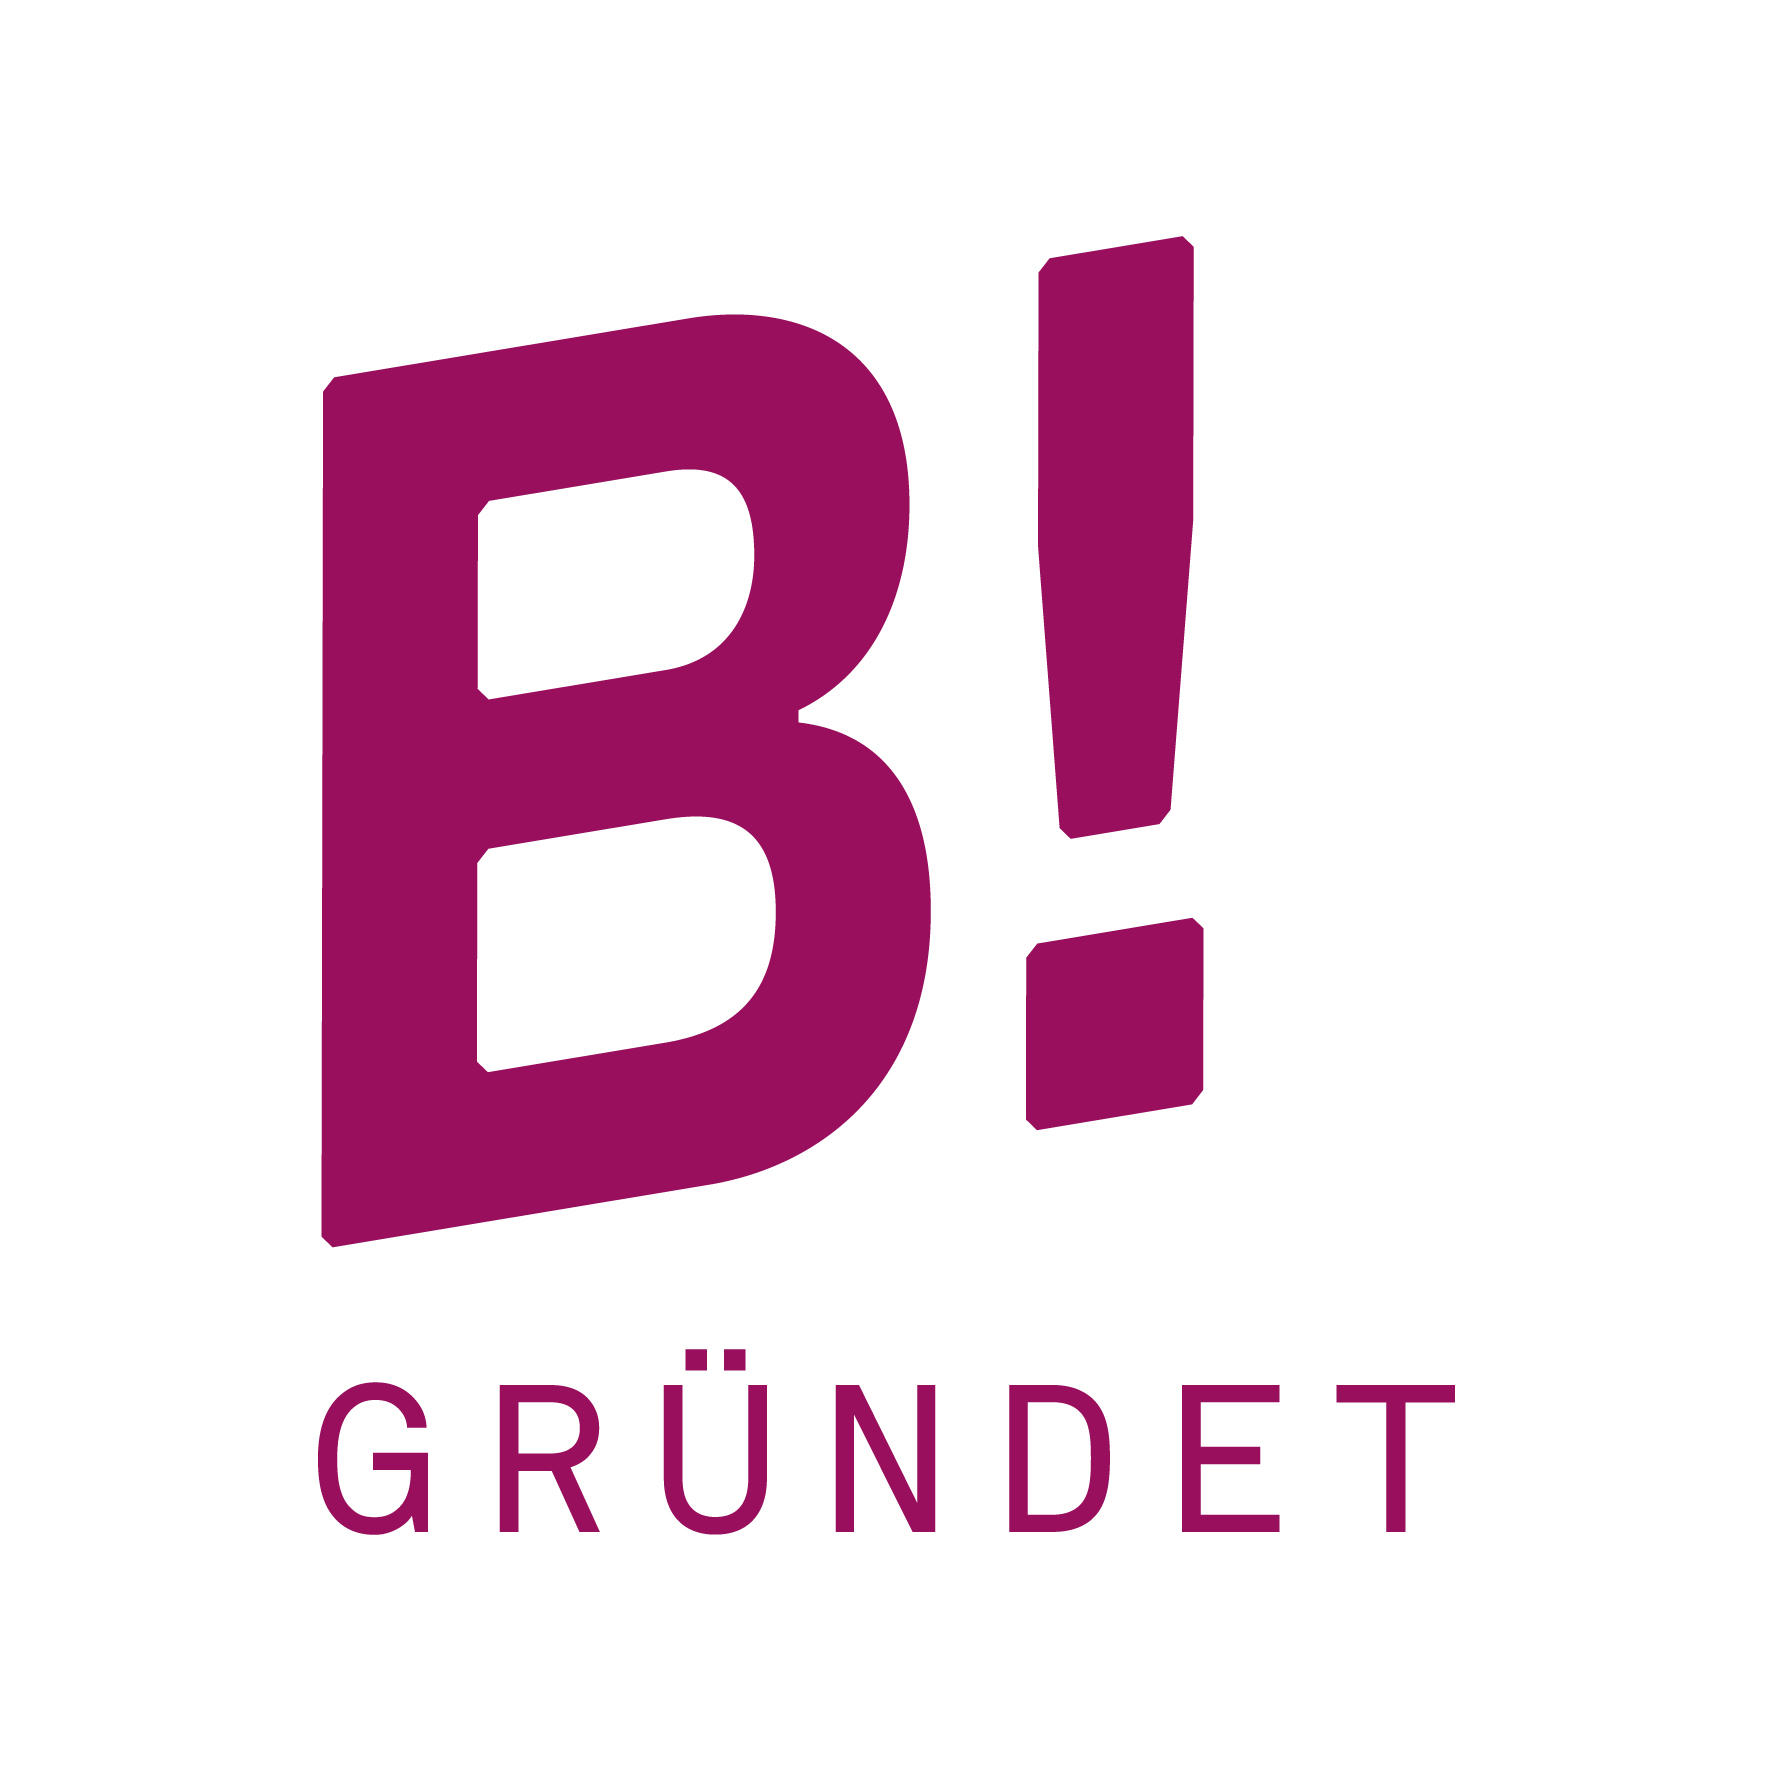 B!GRÜNDET ist das Gründungsnetzwerk der Berliner Hochschulen